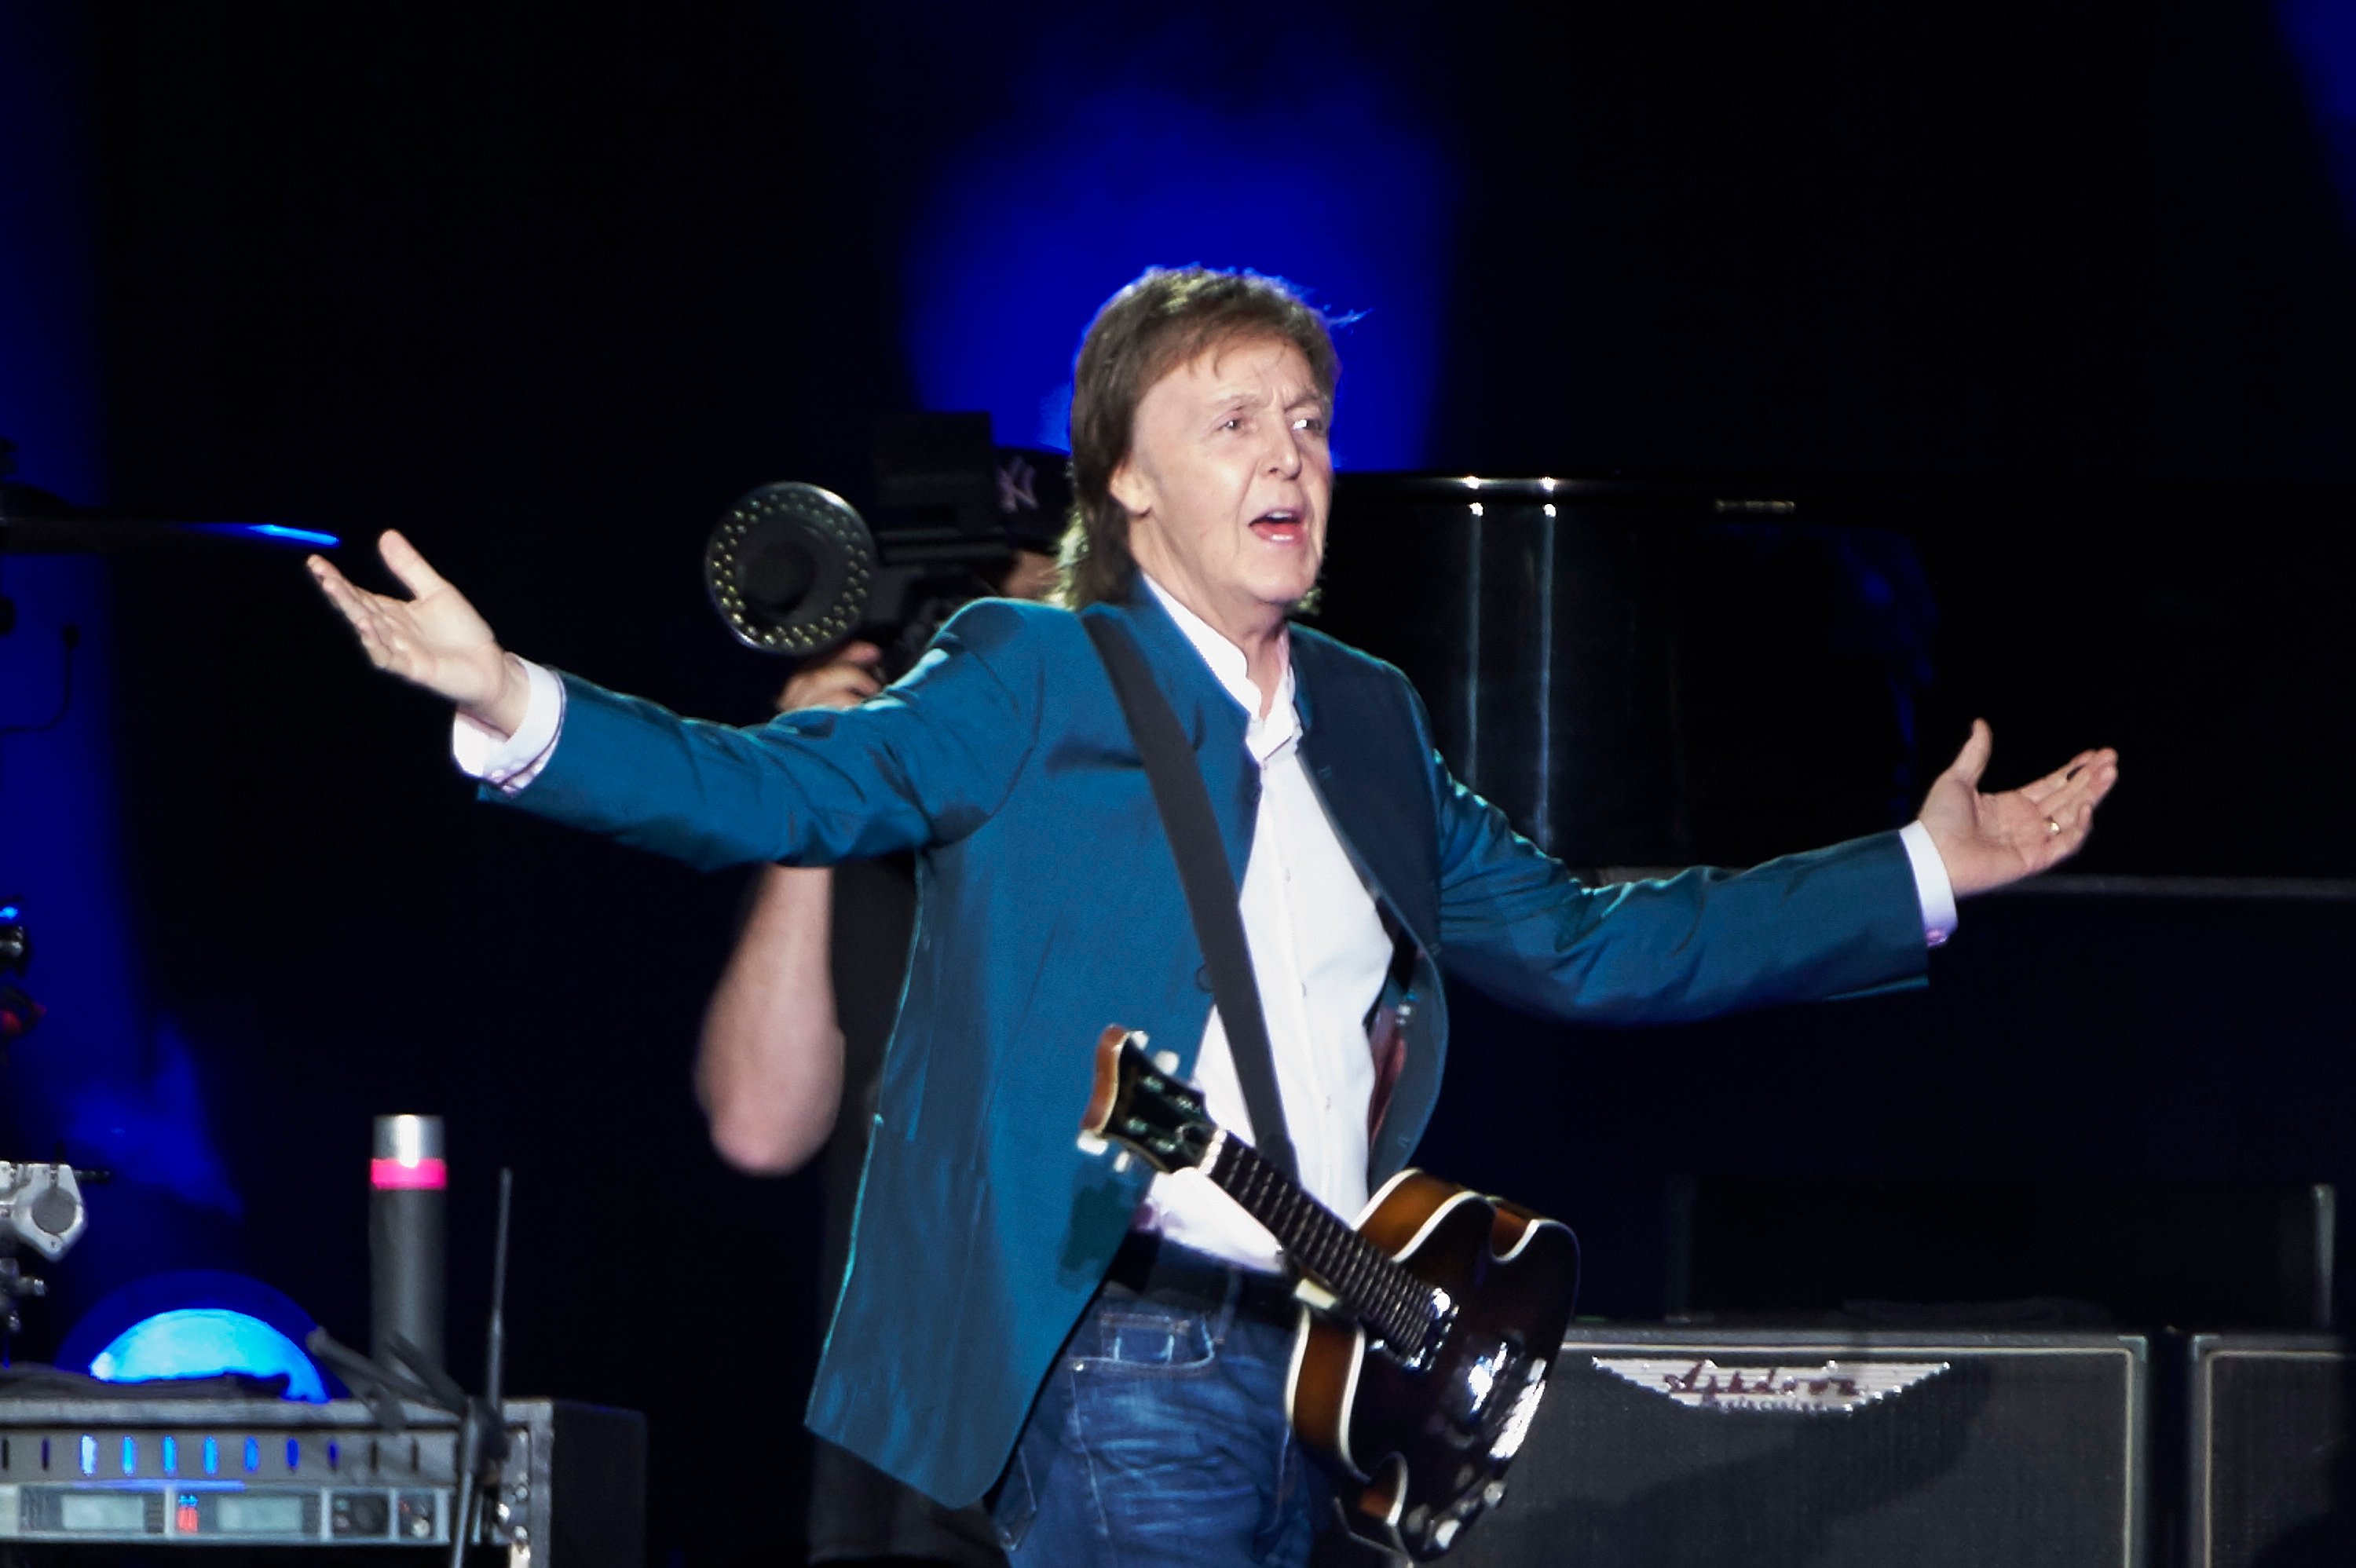 Paul McCartney performs at the Vicente Calderon stadium in Madrid, Spain